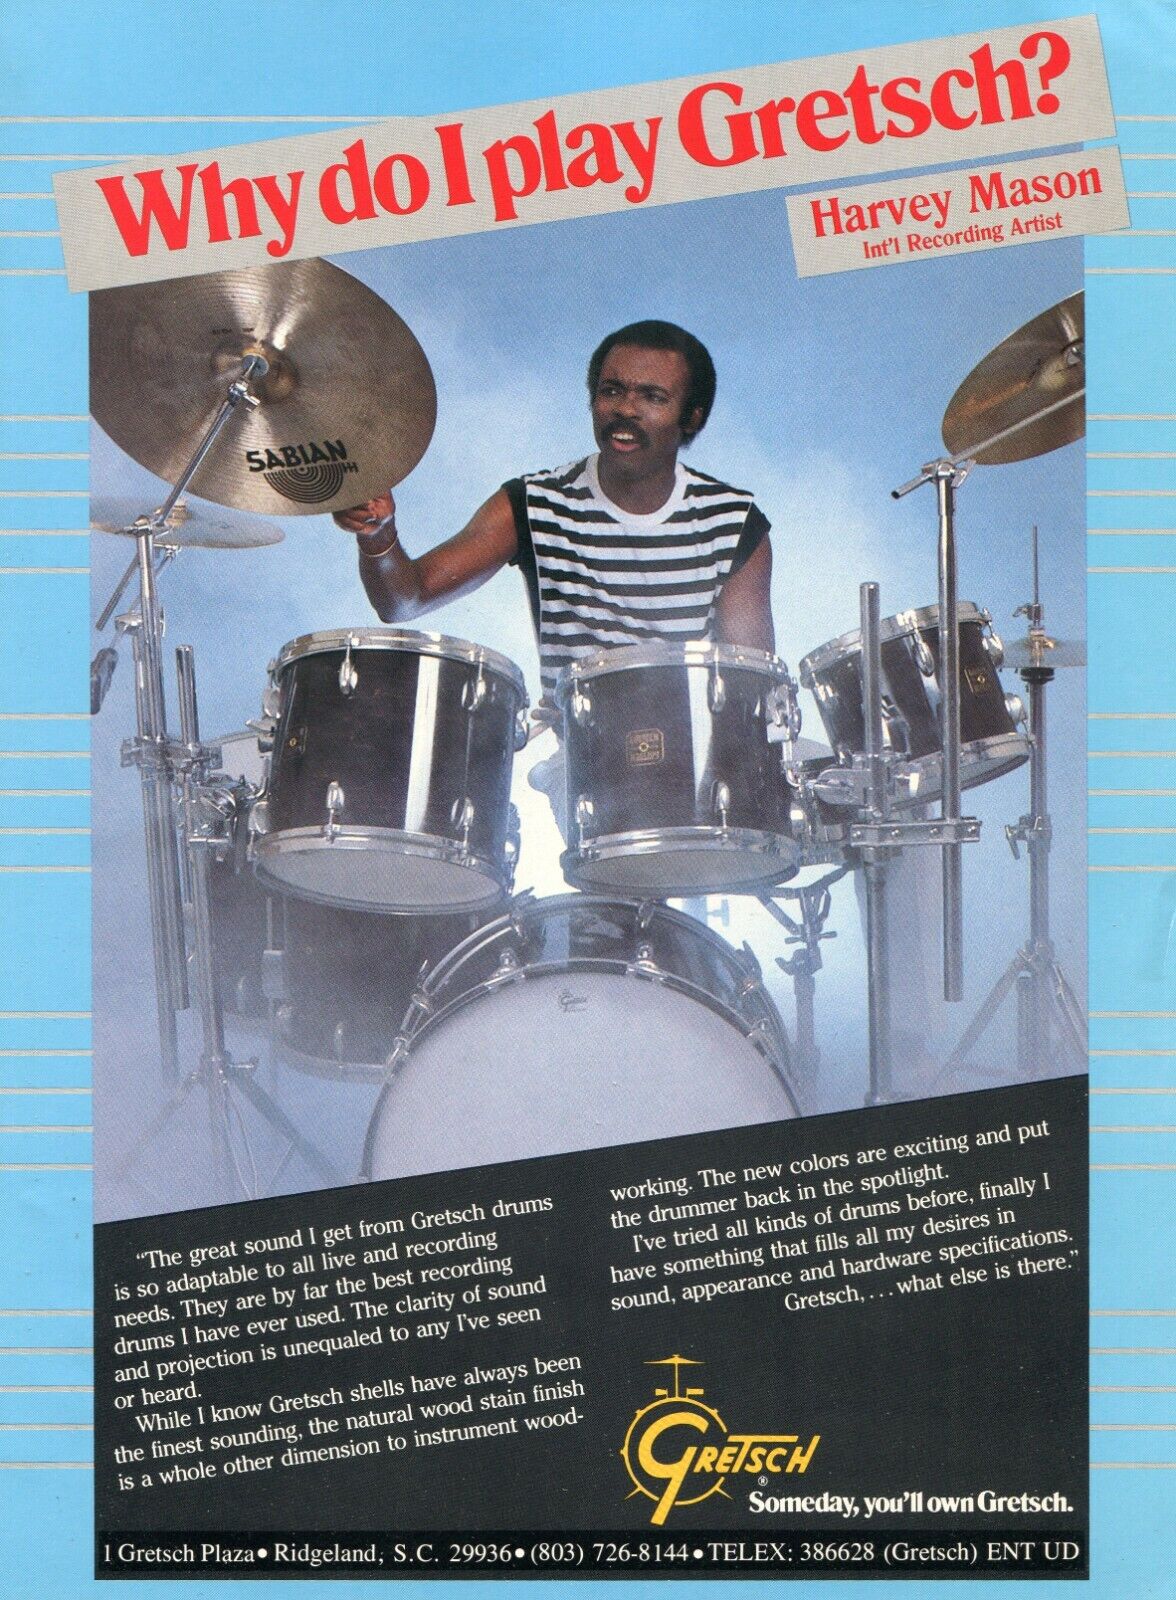 1987 Print Ad of Gretsch Drum Kit w Harvey Mason